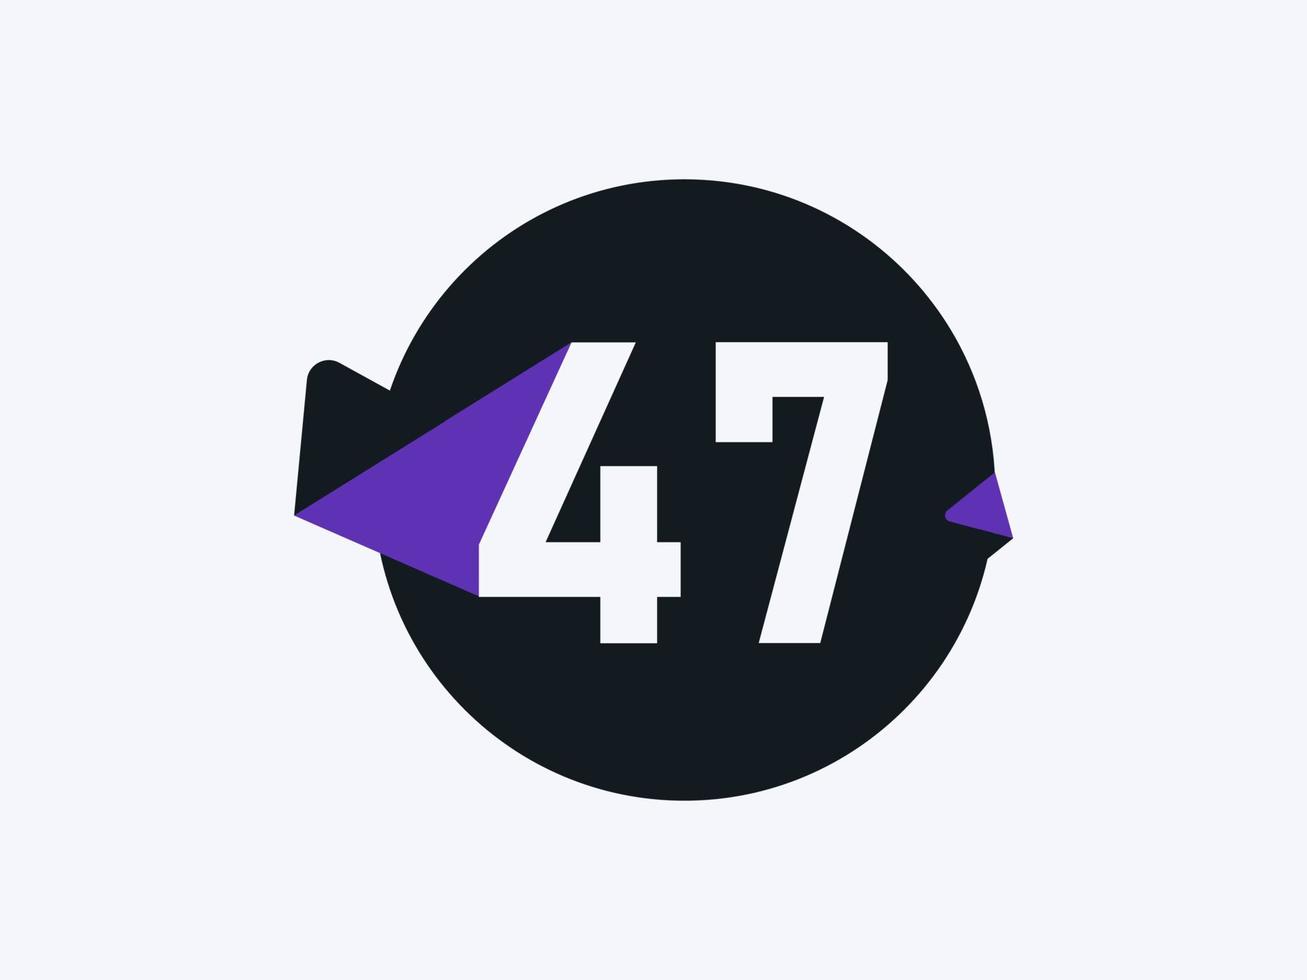 47 Number logo icon design vector image. Number logo icon design vector image